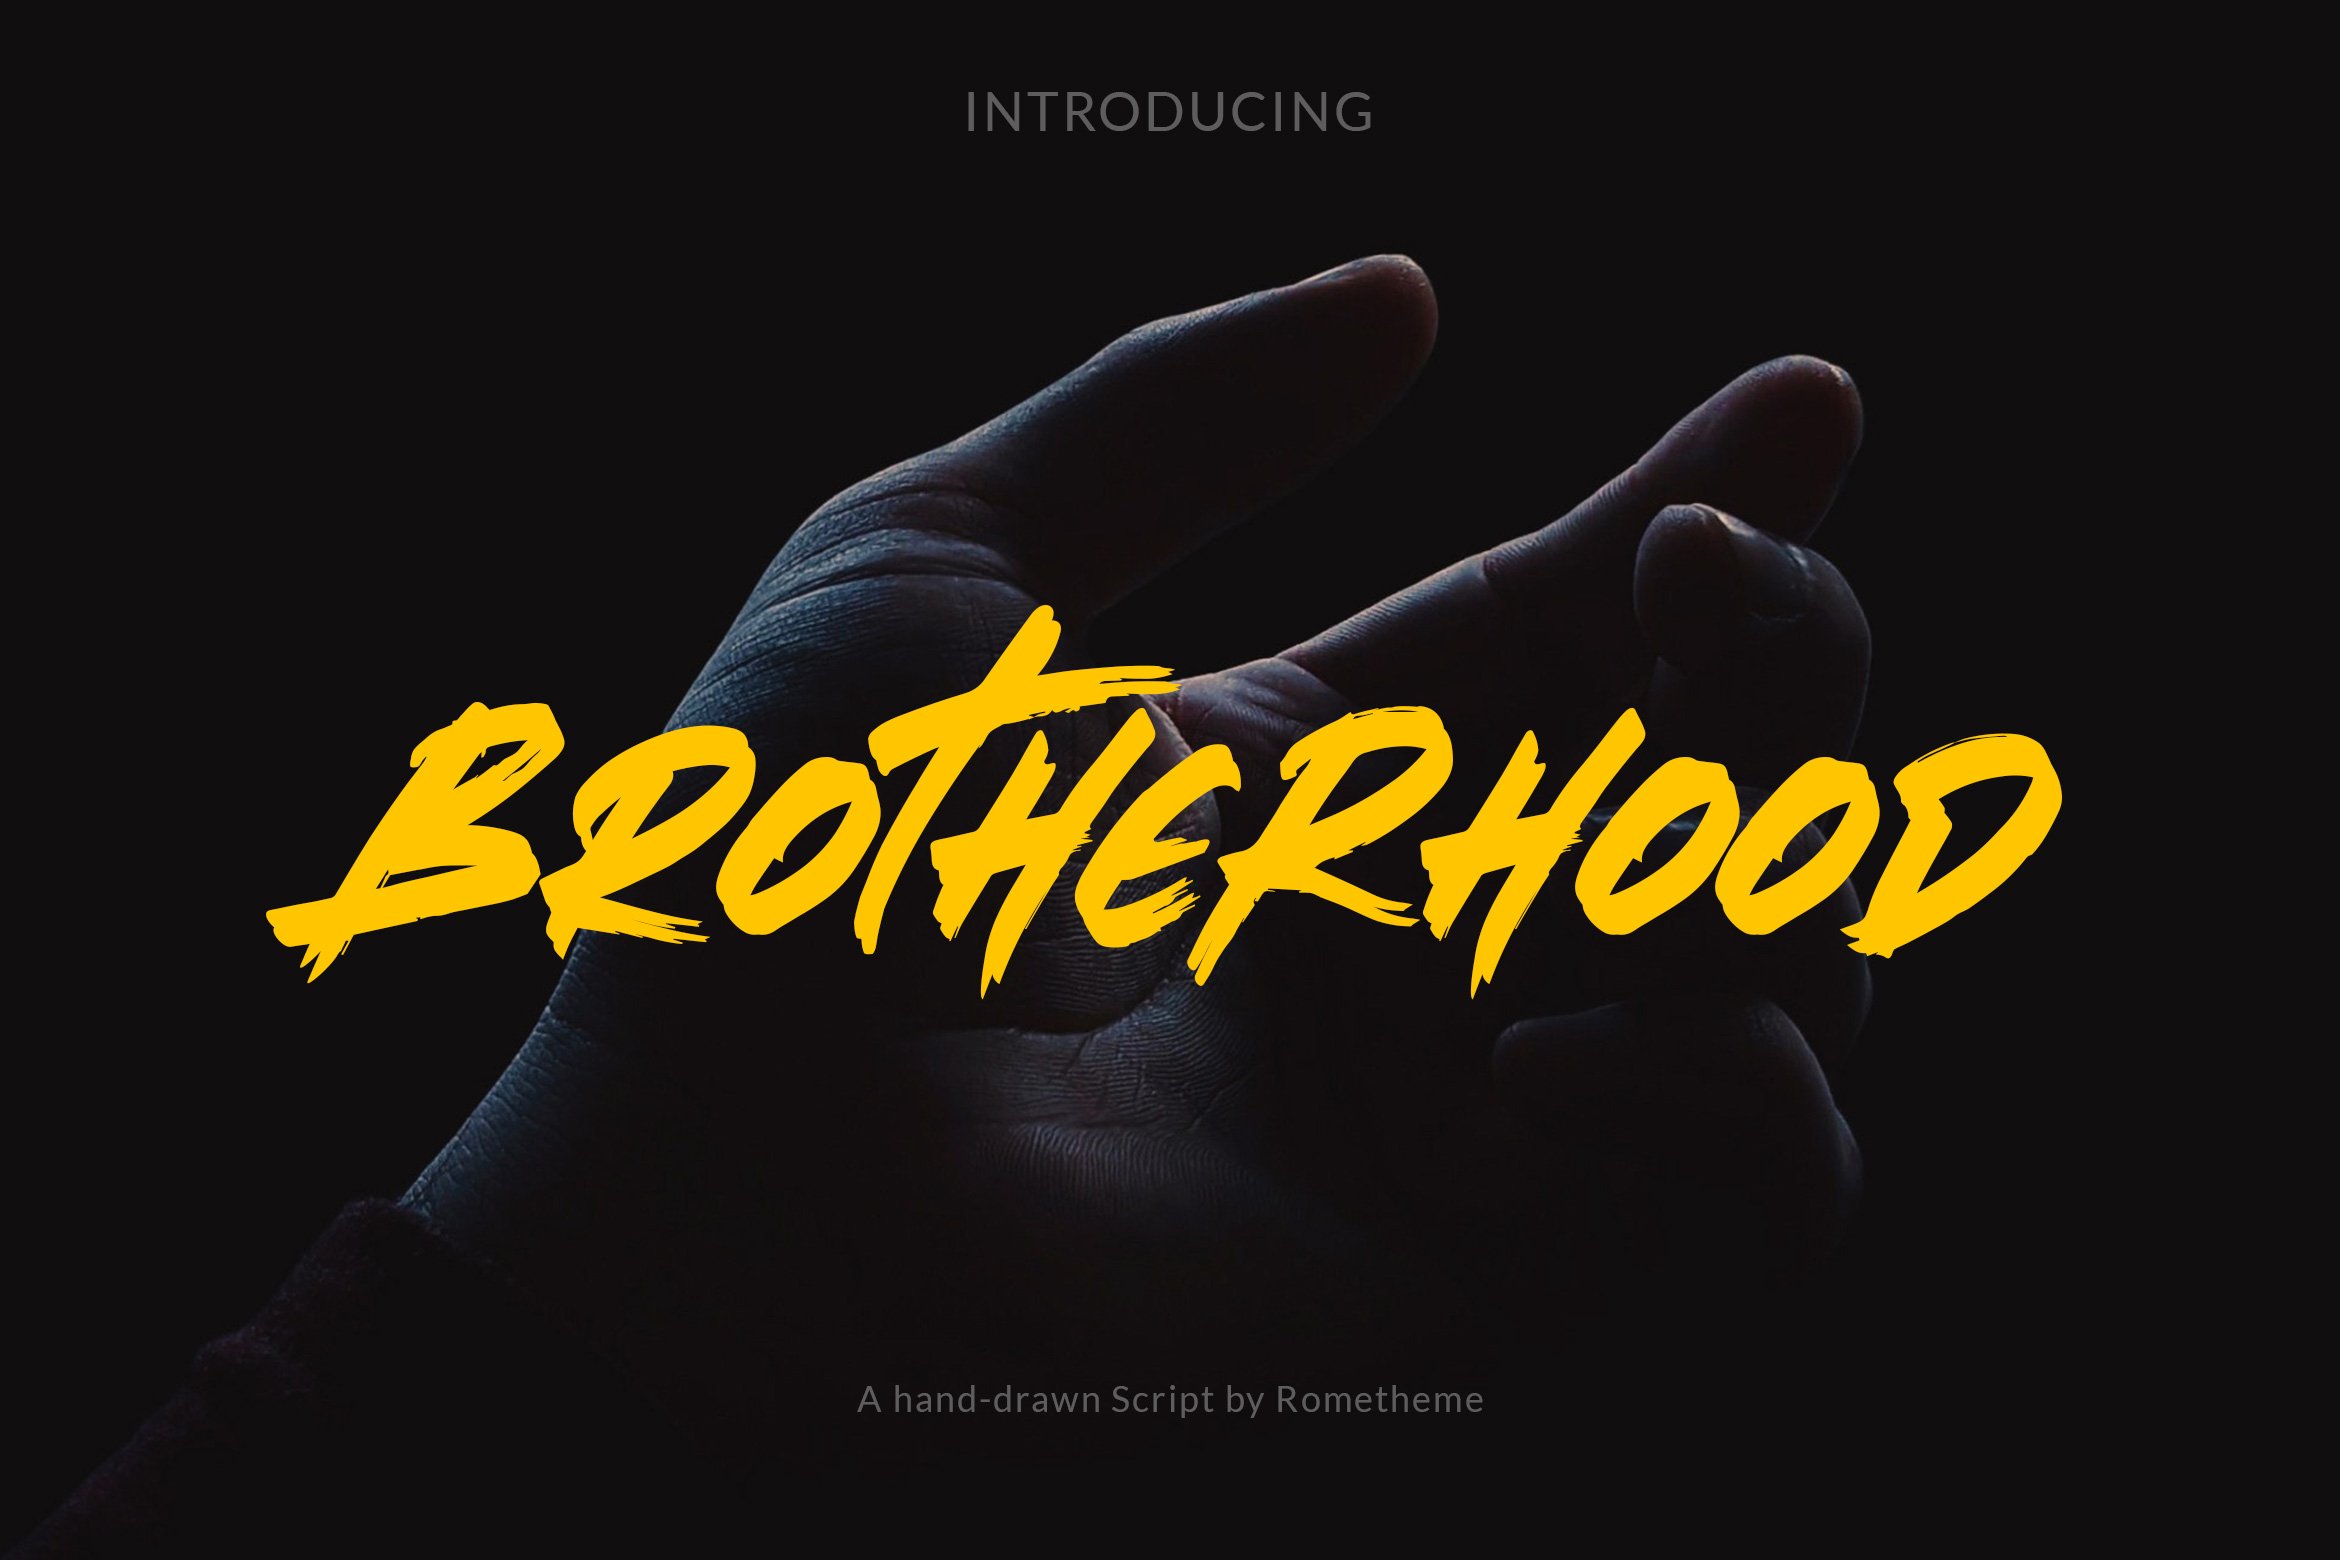 Brotherhood - Brush Script Font cover image.